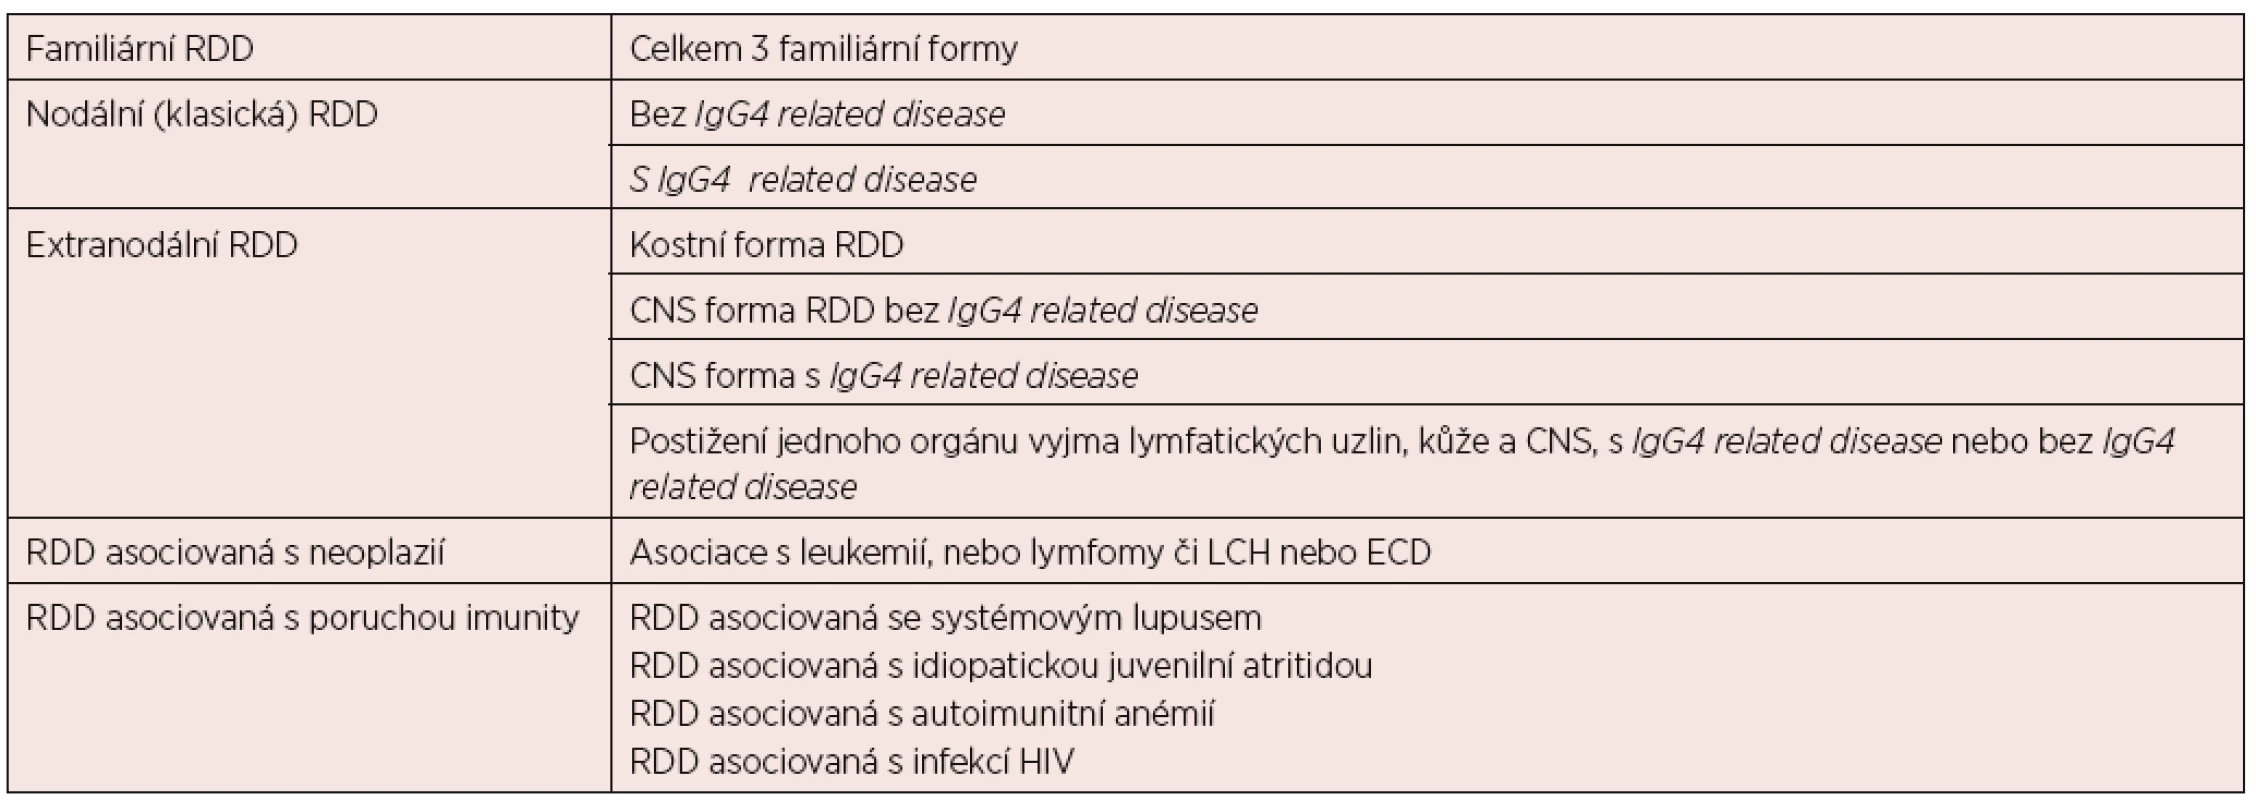 Formy Rosaiovy-Dorfmanovy nemoci (Rosai-Dorfman Disease – RDD) podle klasifikace Histocyte Society [2]